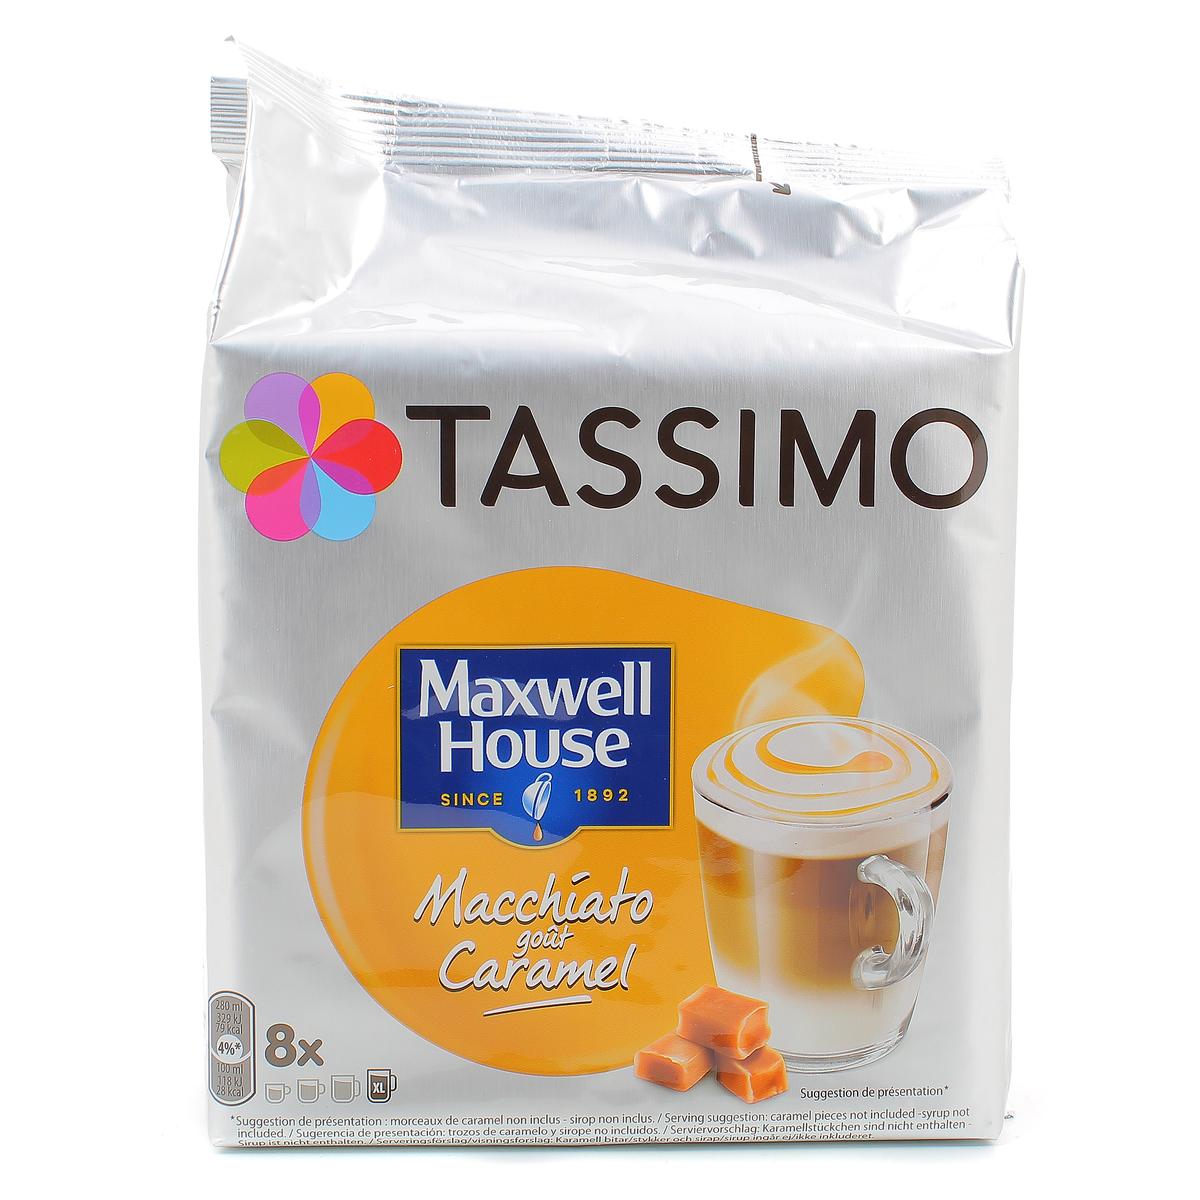 Tassimo Maxwell House Cappuccino Chocolat en Capsule - 8 boissons